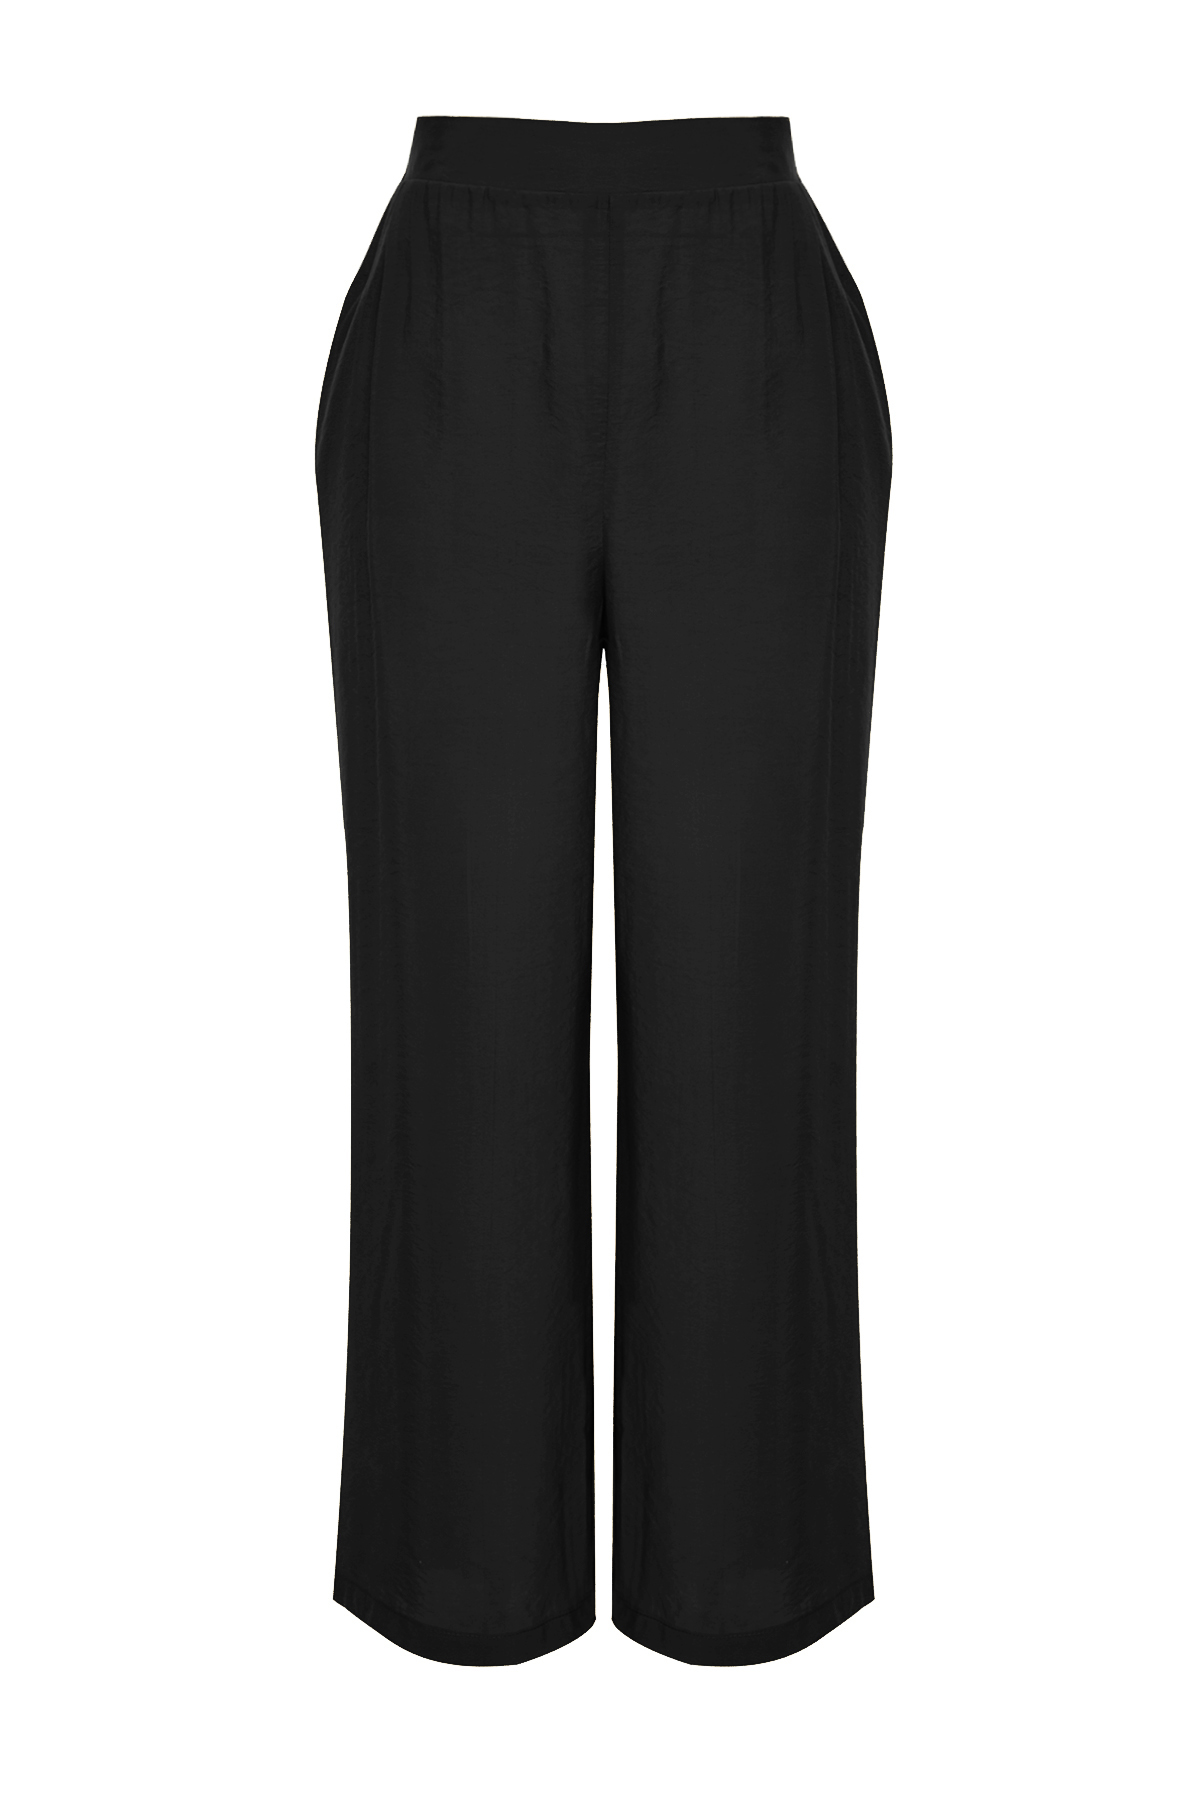 Trendyol Curve Black Wideleg Woven Trousers